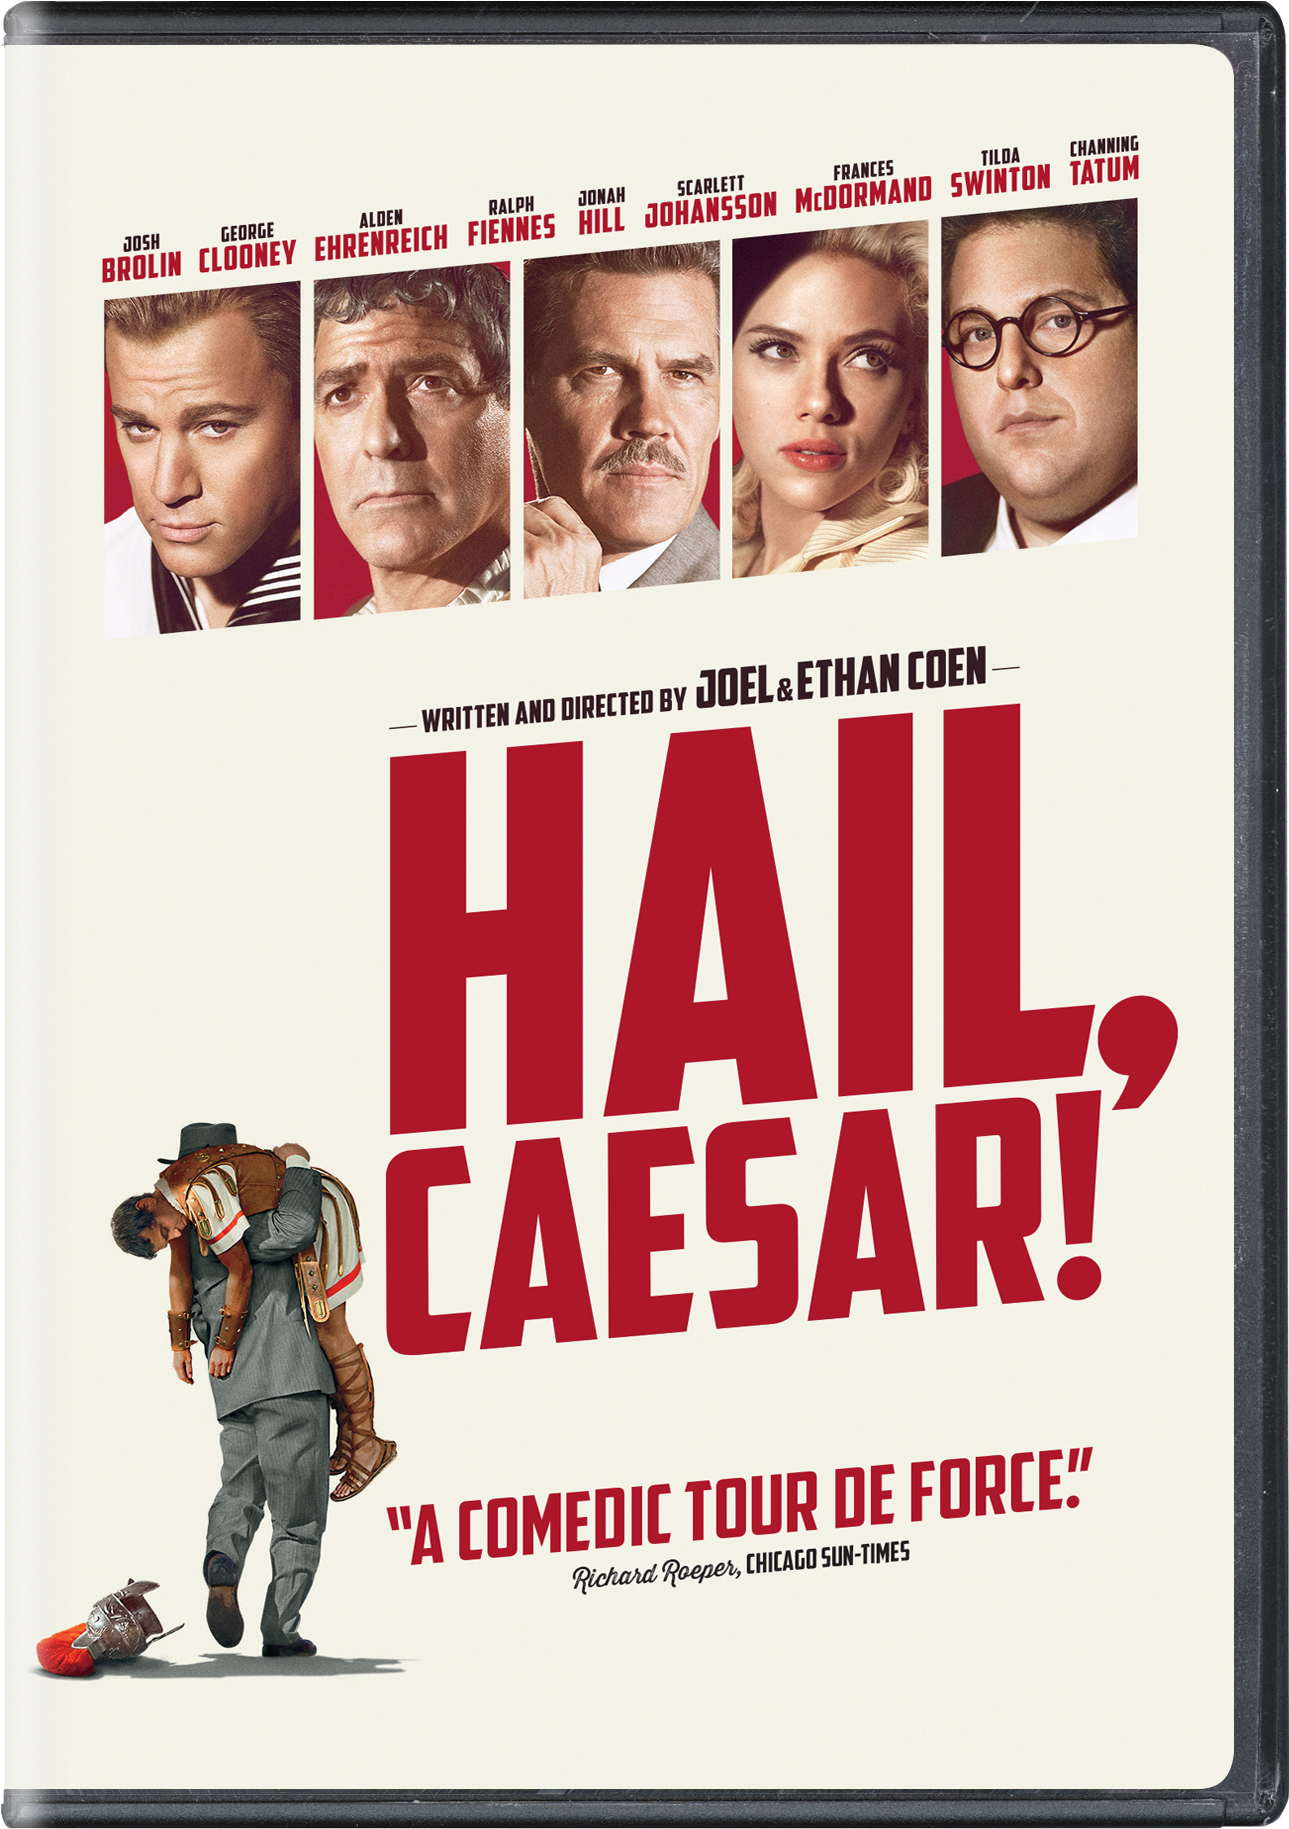 Hail, Caesar! - DVD [ 2016 ]  - Comedy Movies On DVD - Movies On GRUV